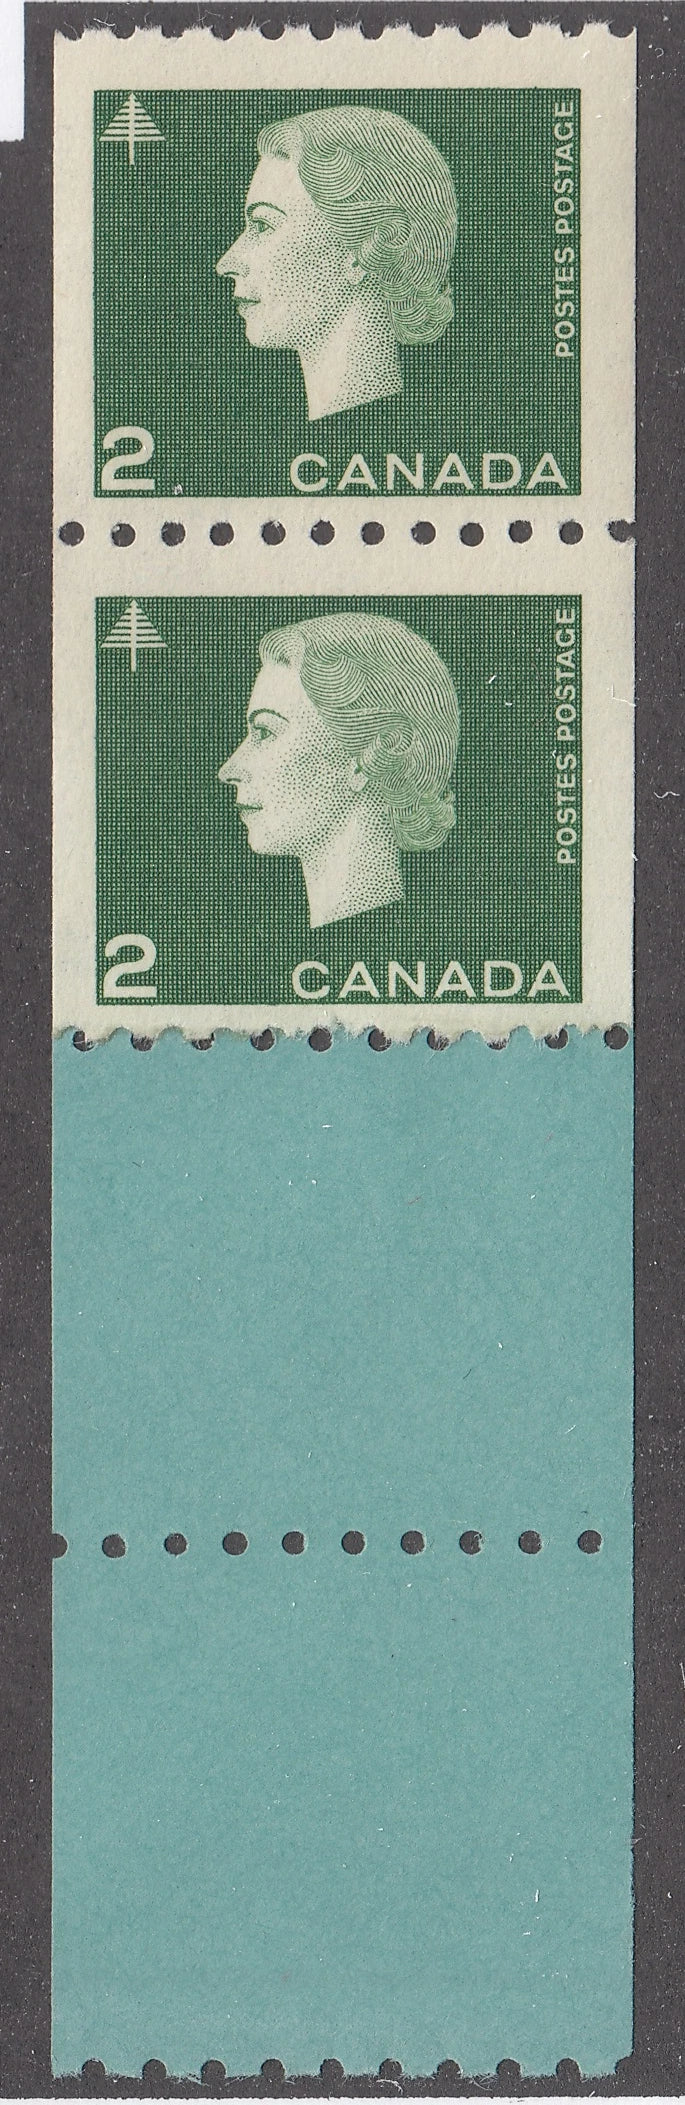 0406CA2103 - Canada #406 - Mint Coil Pair Starter